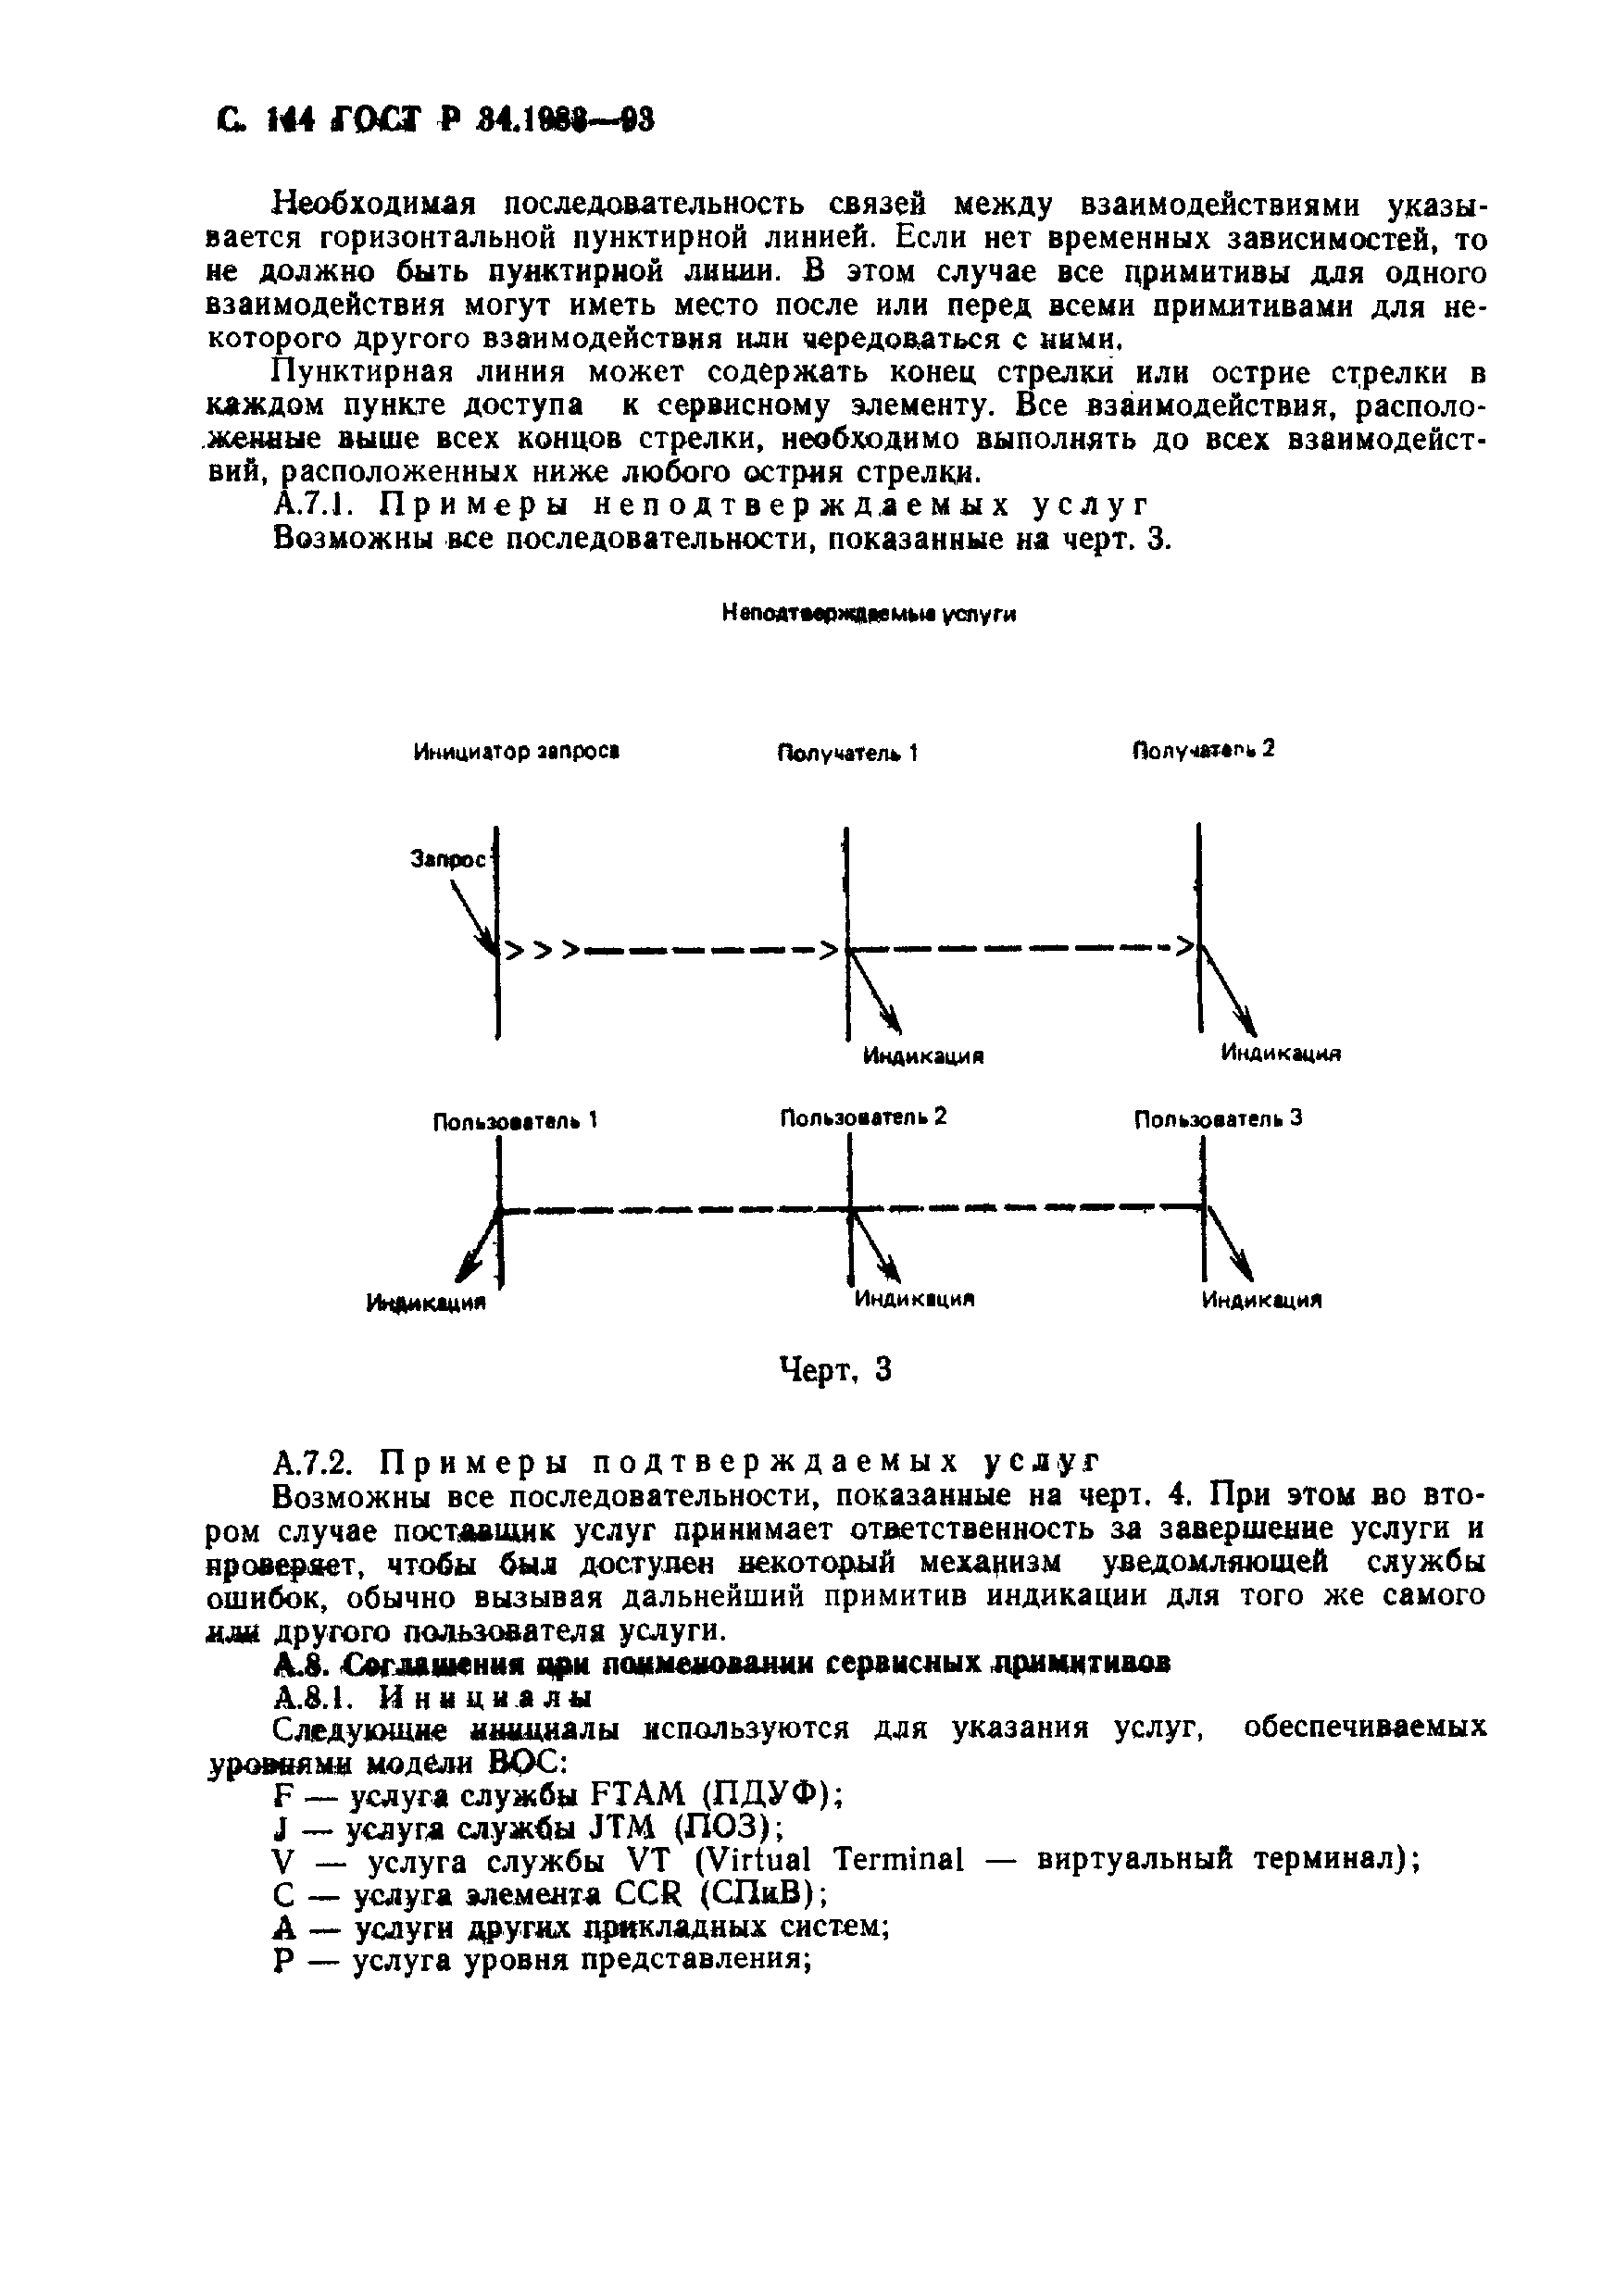 ГОСТ Р 34.1983-93. Страница 145